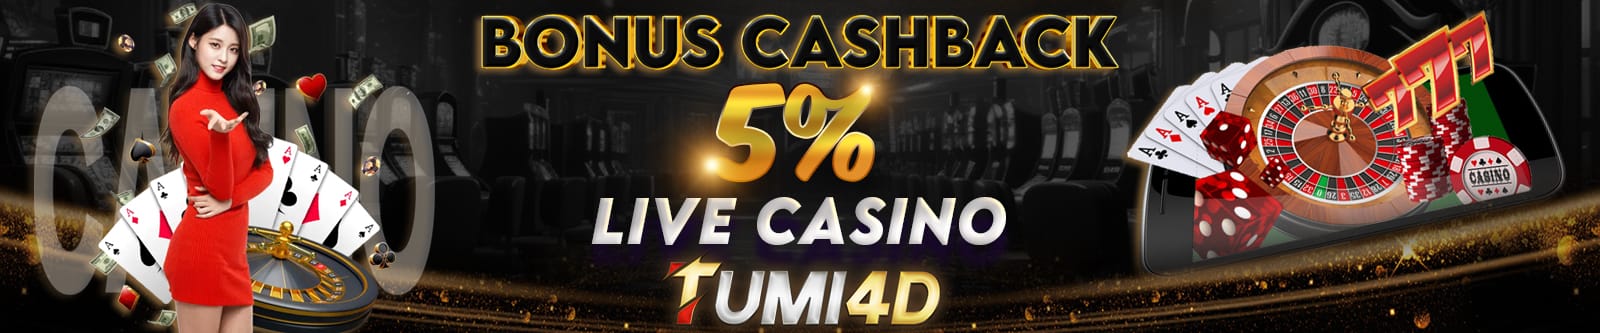 Tumi4d Cashback Mingguan Live Casino 5%